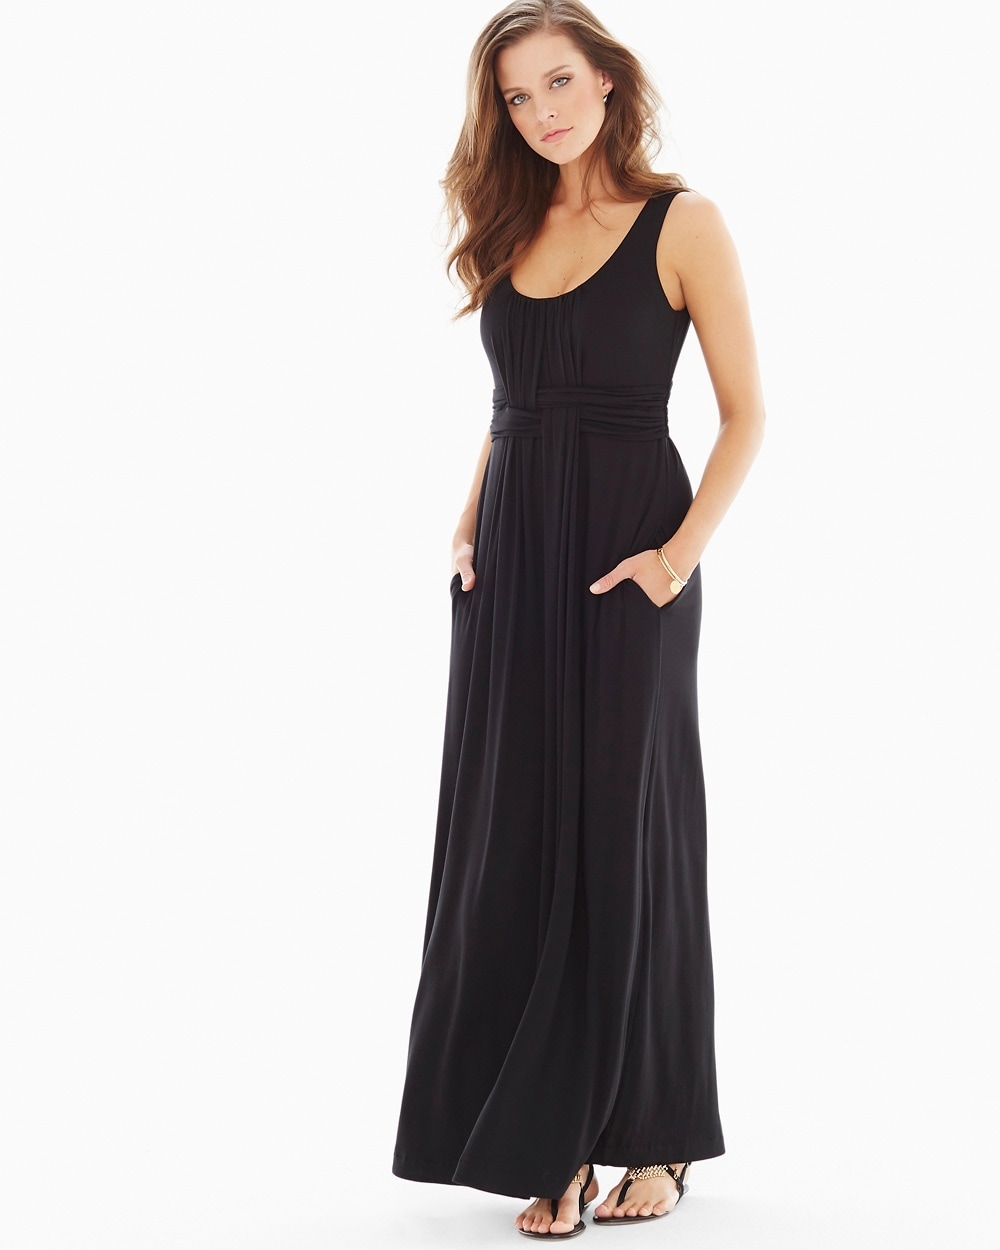 Shop Women's Dresses - New Arrivals - Soma